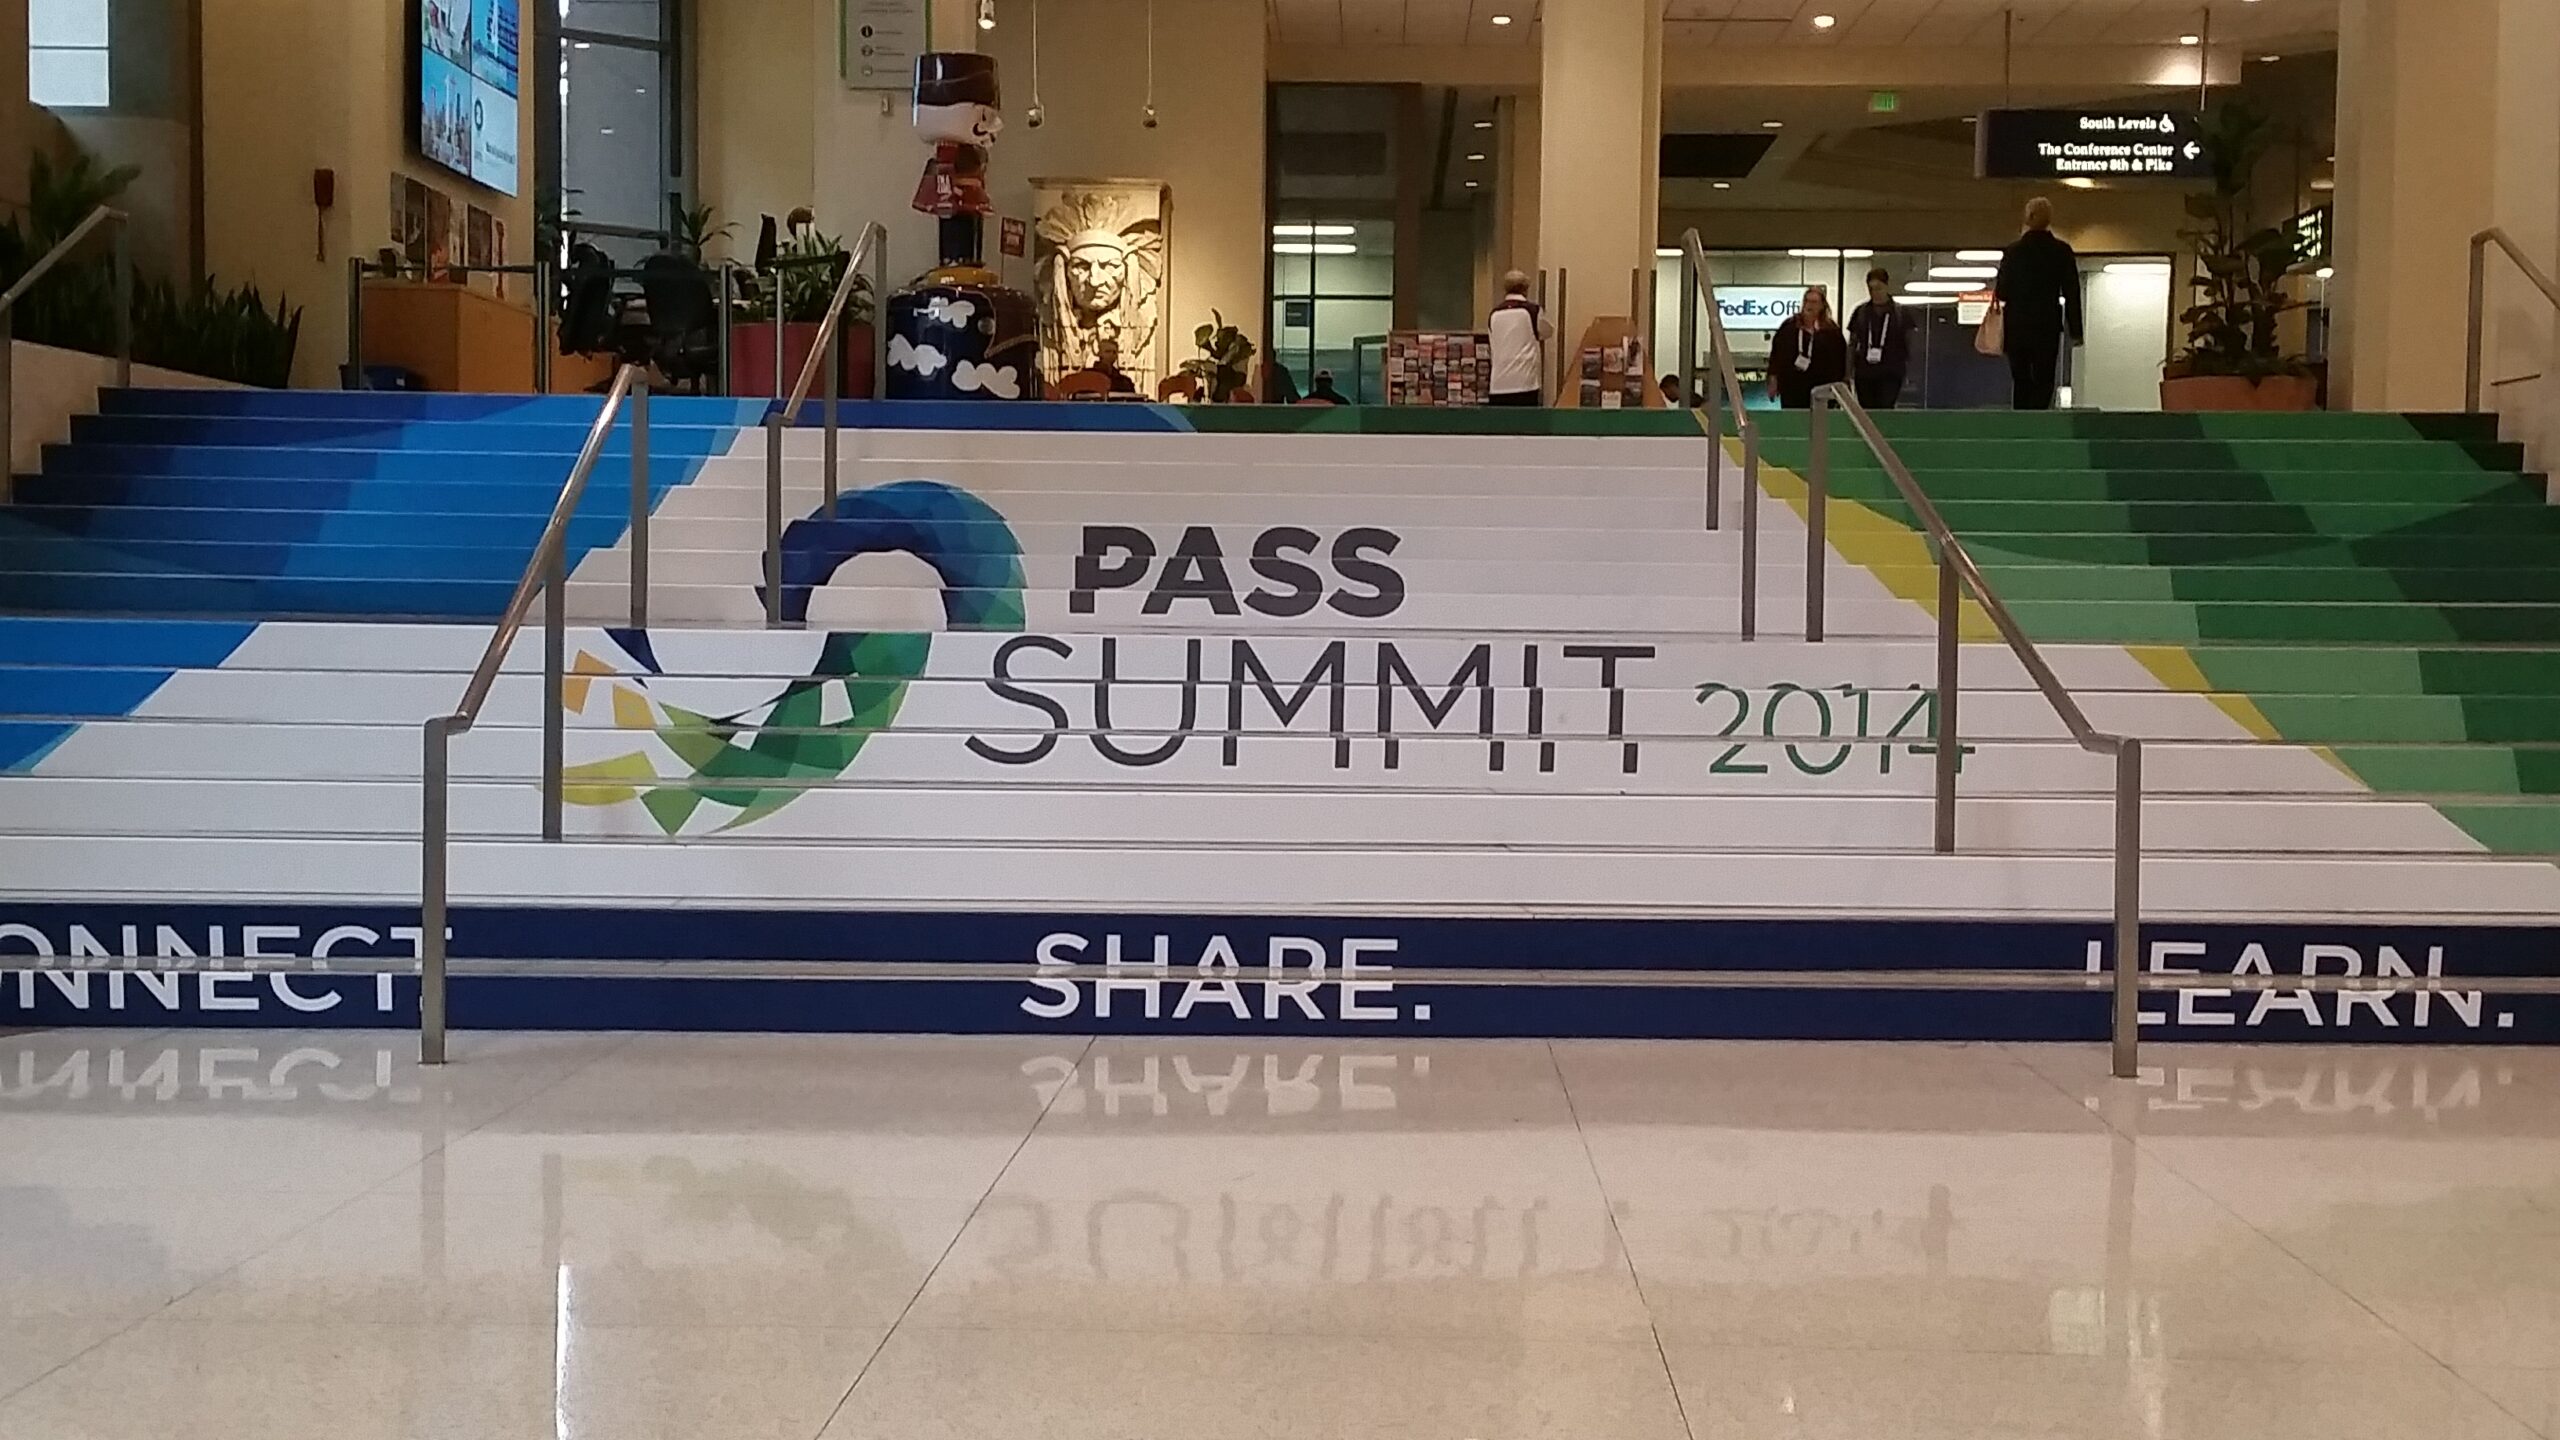 SQL PASS Summit 2014: @SQLPASS